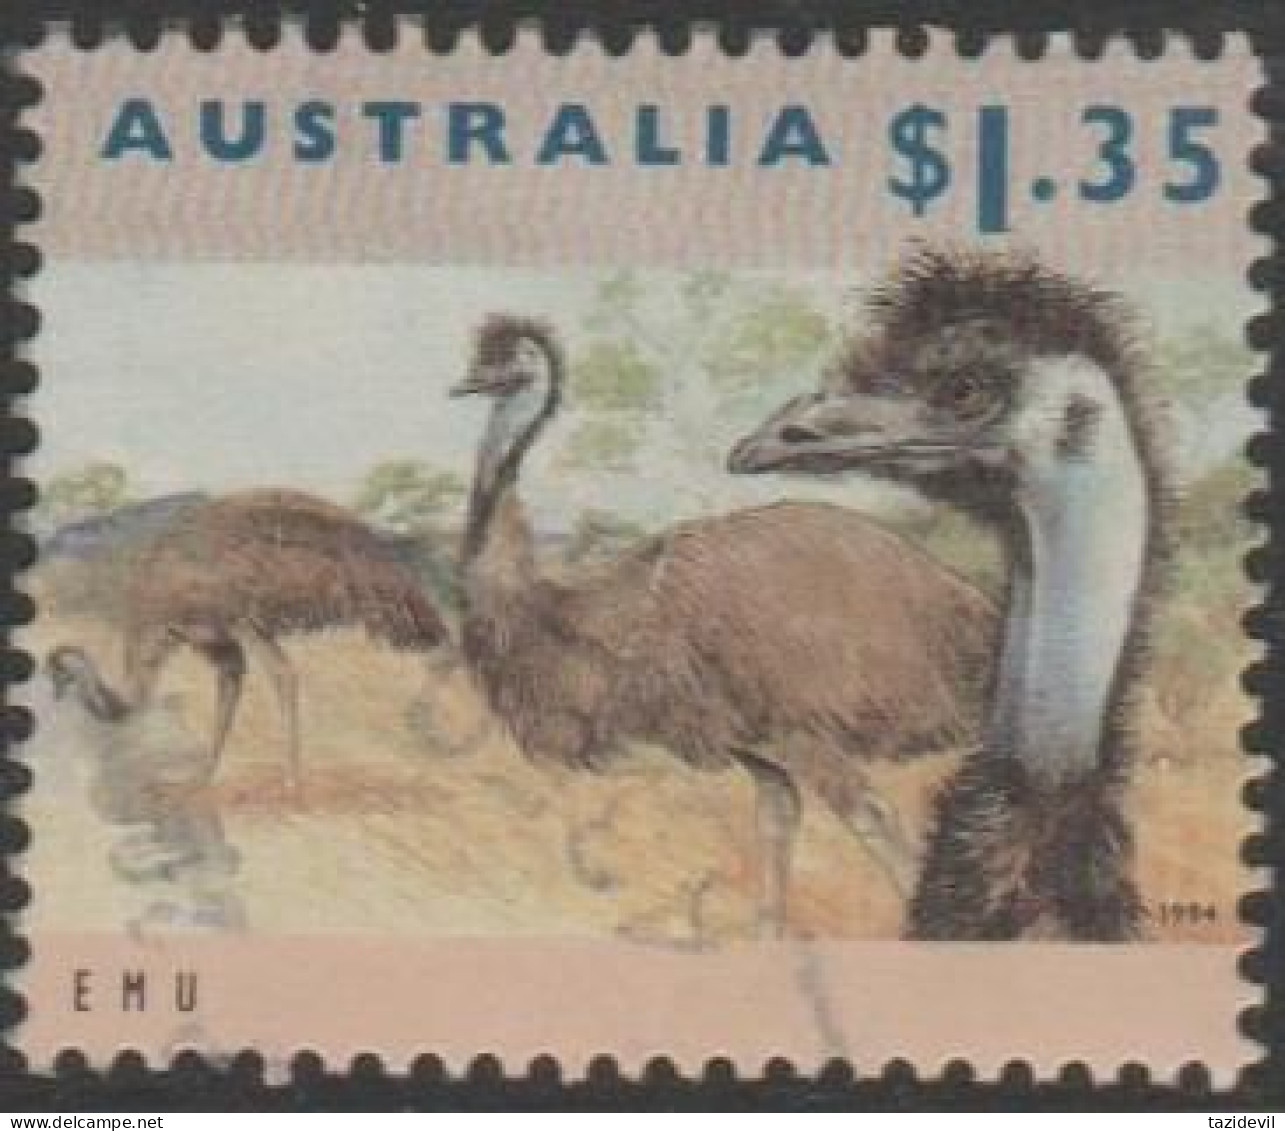 AUSTRALIA - USED 1994 $1.35 Wildlife - Emu - Bird - Used Stamps